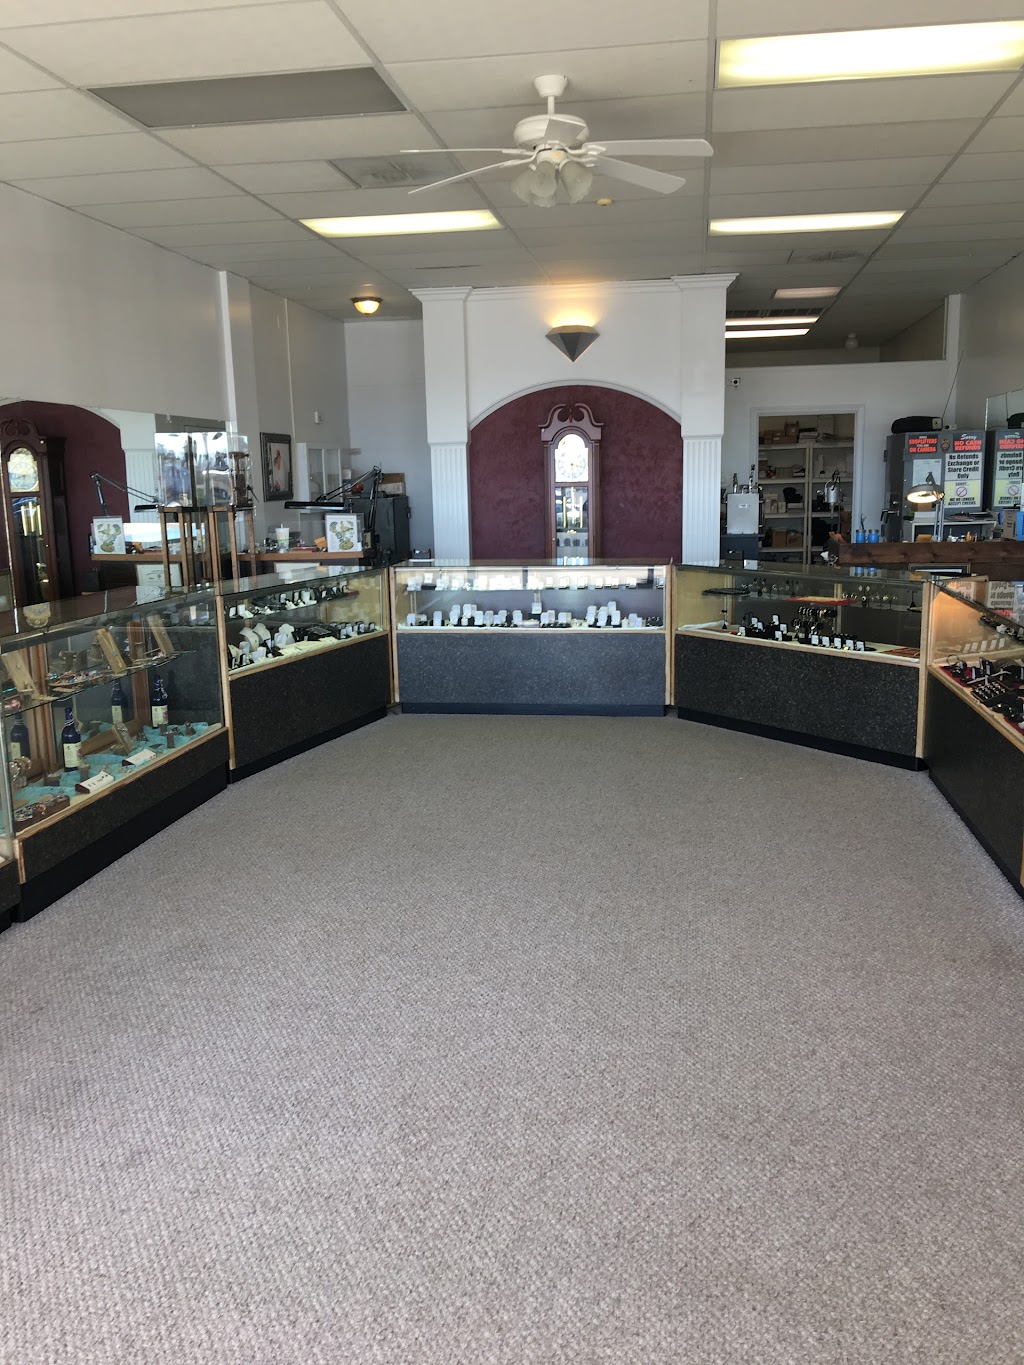 Ricks Jewelers | 111 Siler Crossing, Siler City, NC 27344, USA | Phone: (919) 742-1232